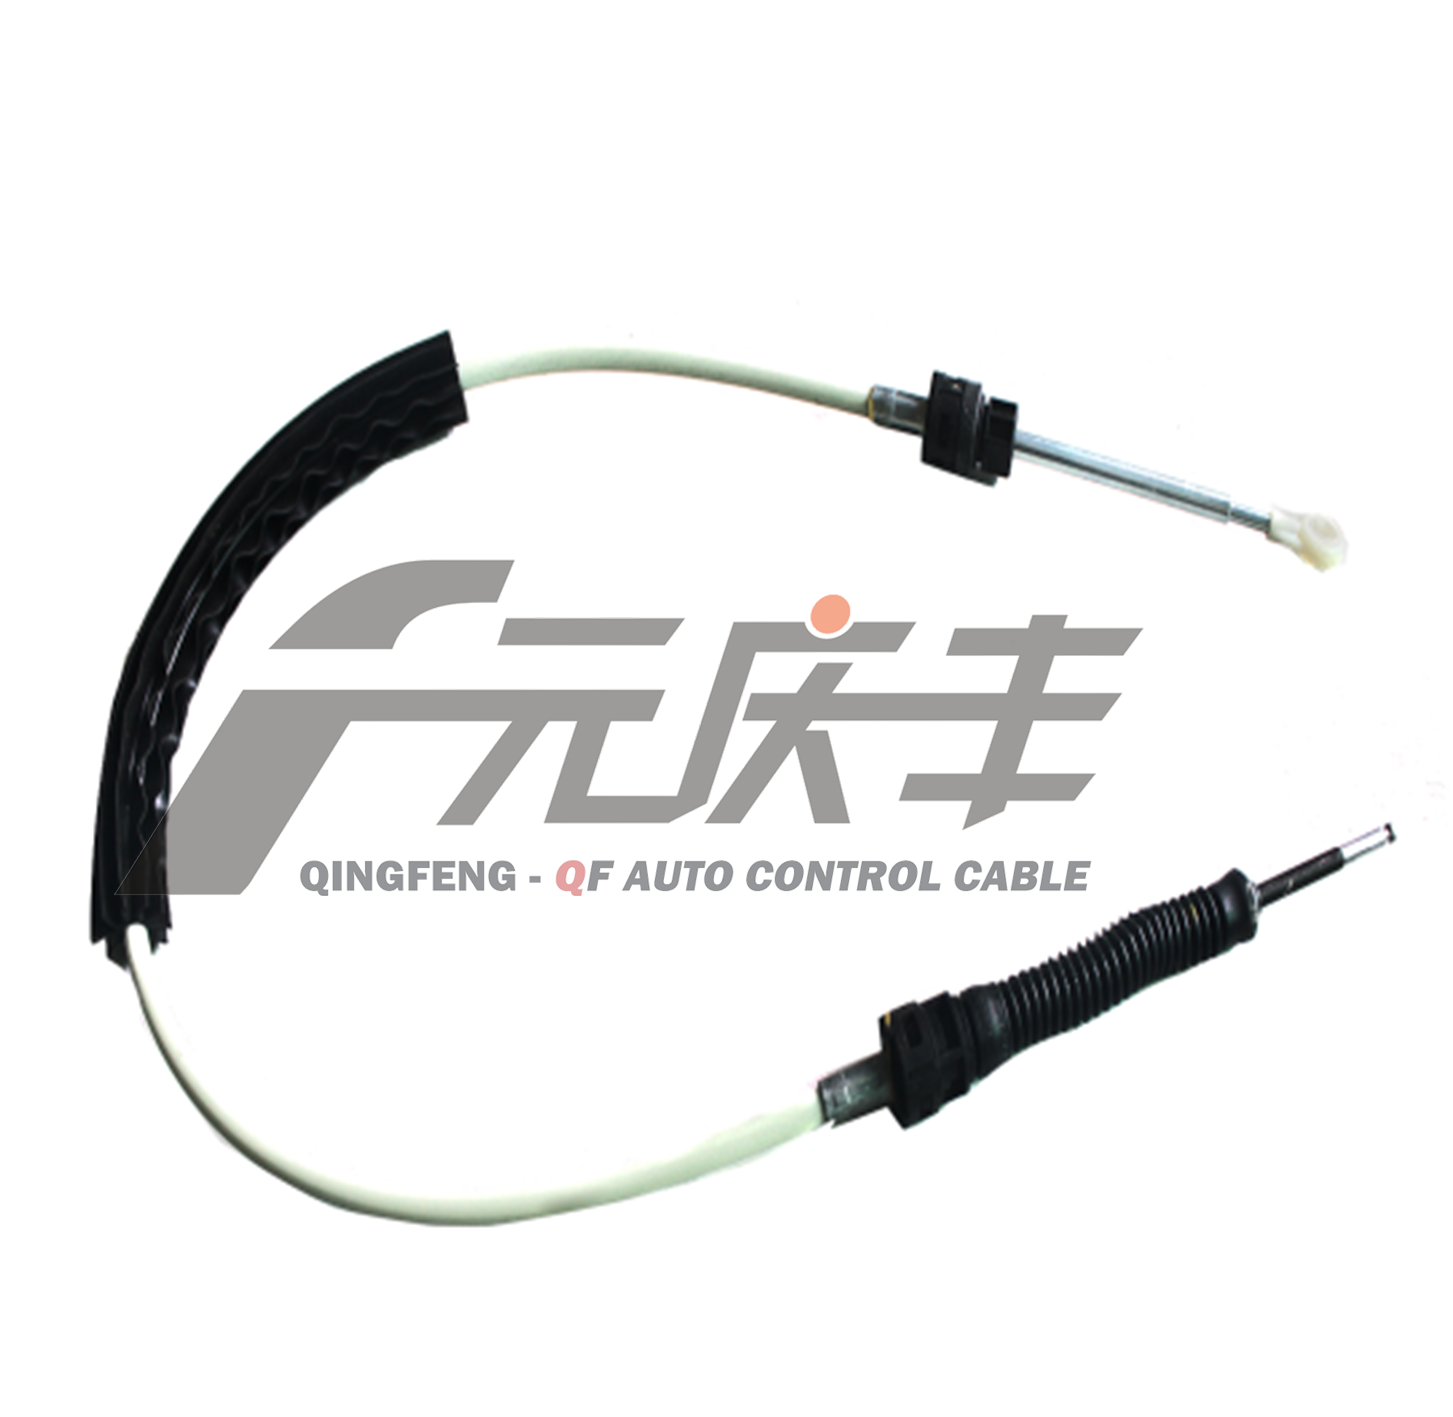 1J0 711 265Q Gear shift cable transmission cable for Beetle/Corrado/Golf/Jetta/Passat